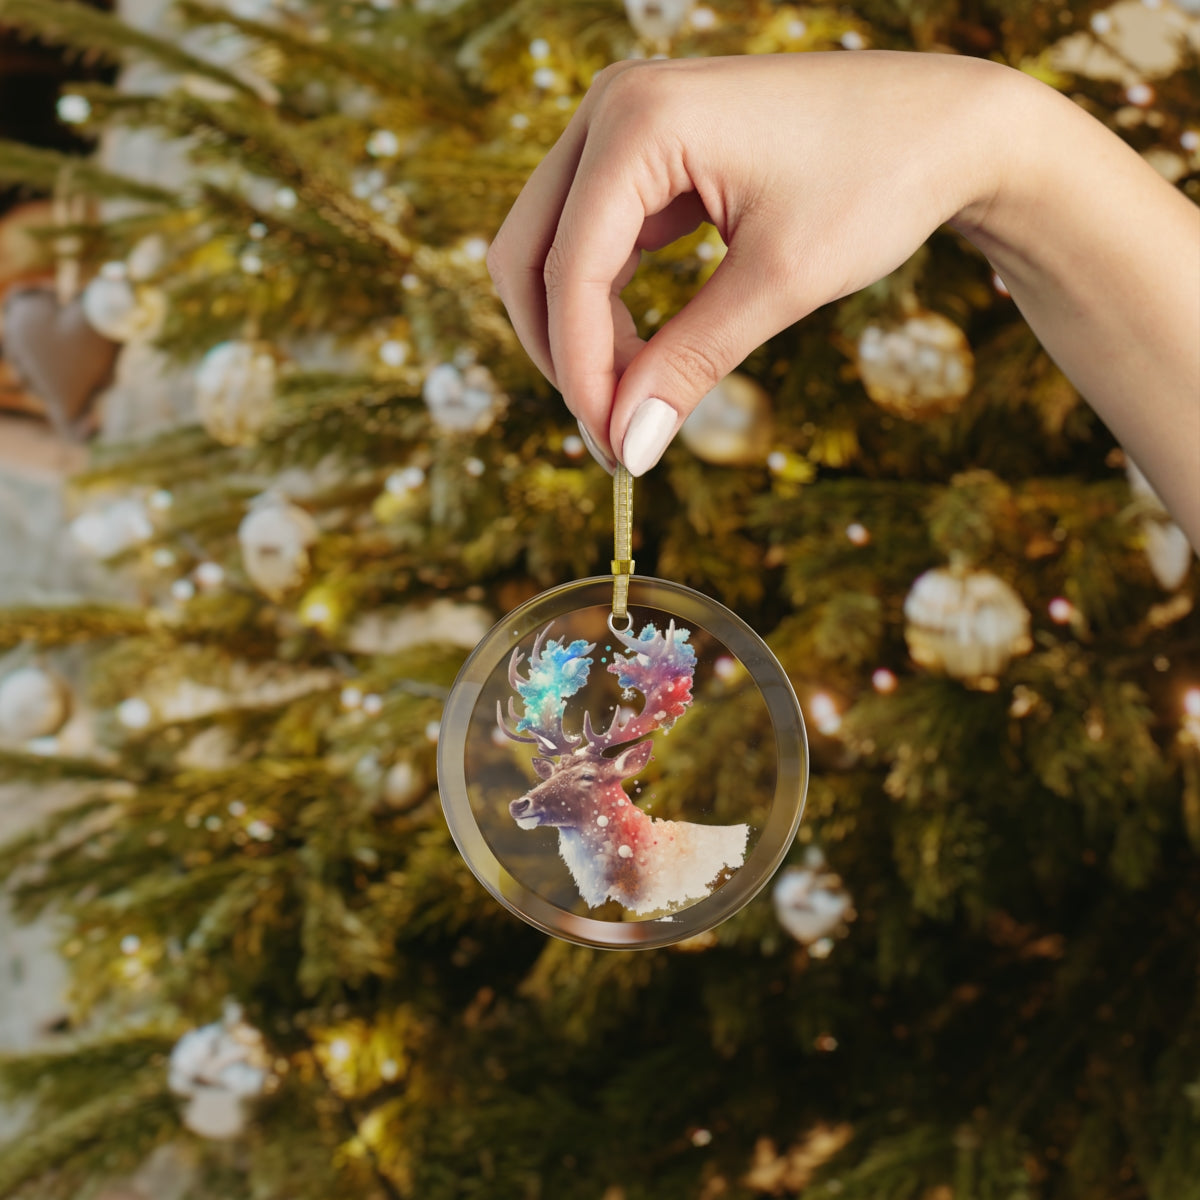 Neduz Designs Exposed Christmas Holidays Reindeer Glass Ornament